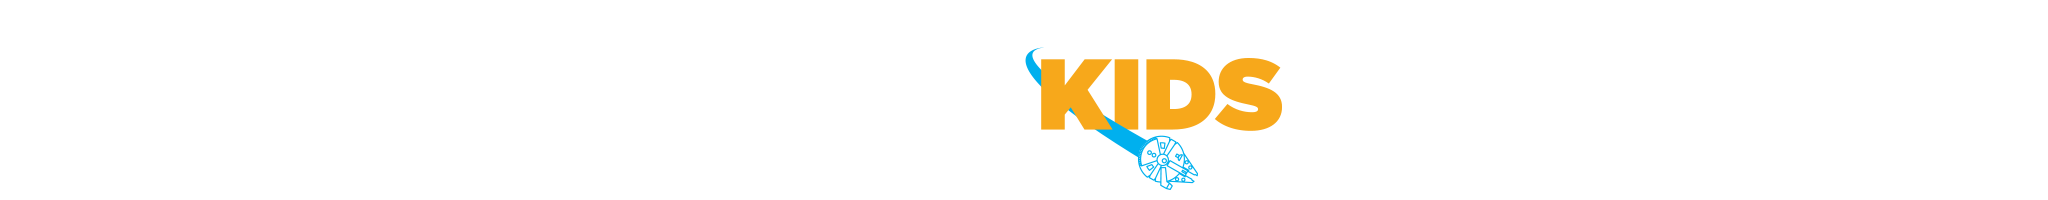 Star Wars Kids